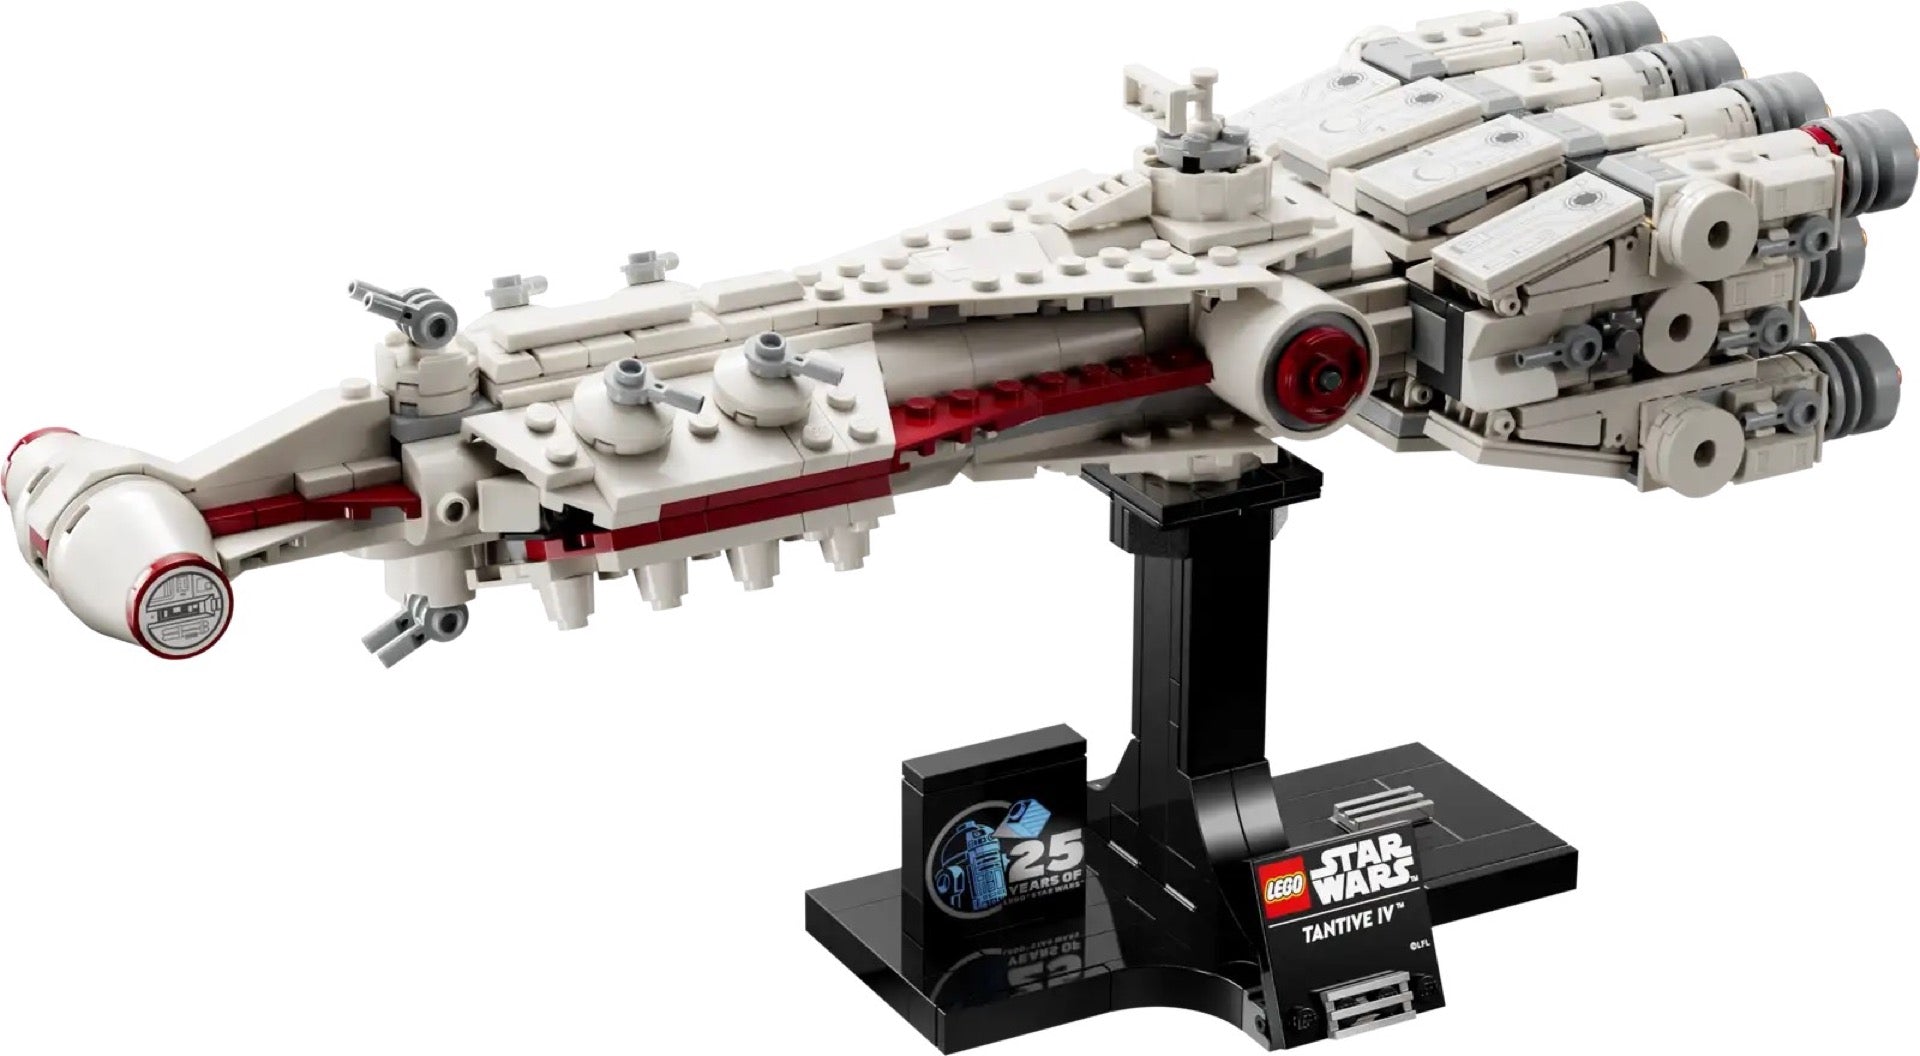 75376 LEGO Star Wars Tantive IV